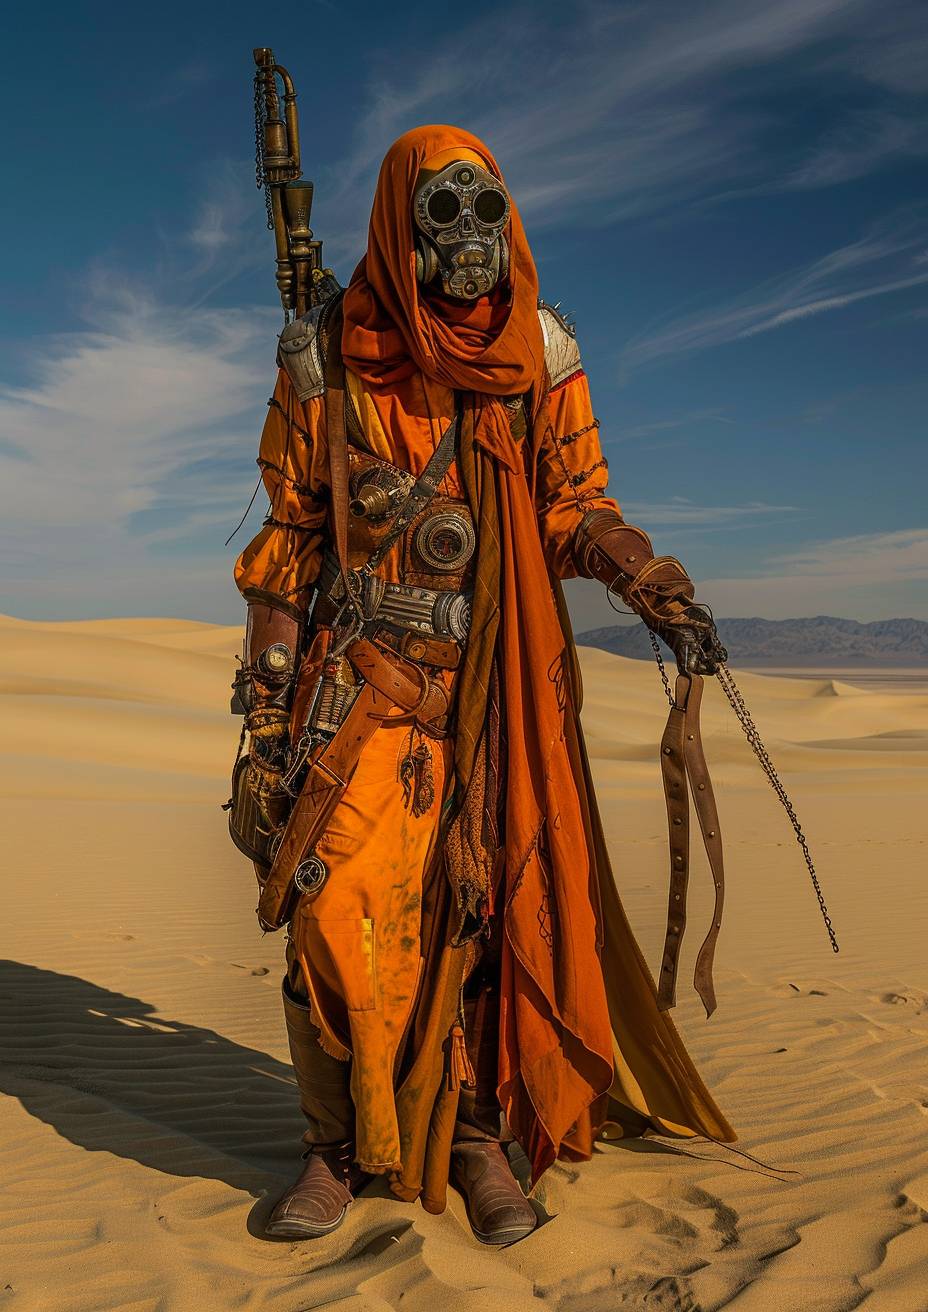 Steampunk traveler monk in the desert by Lynsey Addario--AR 5:7--version 6.0